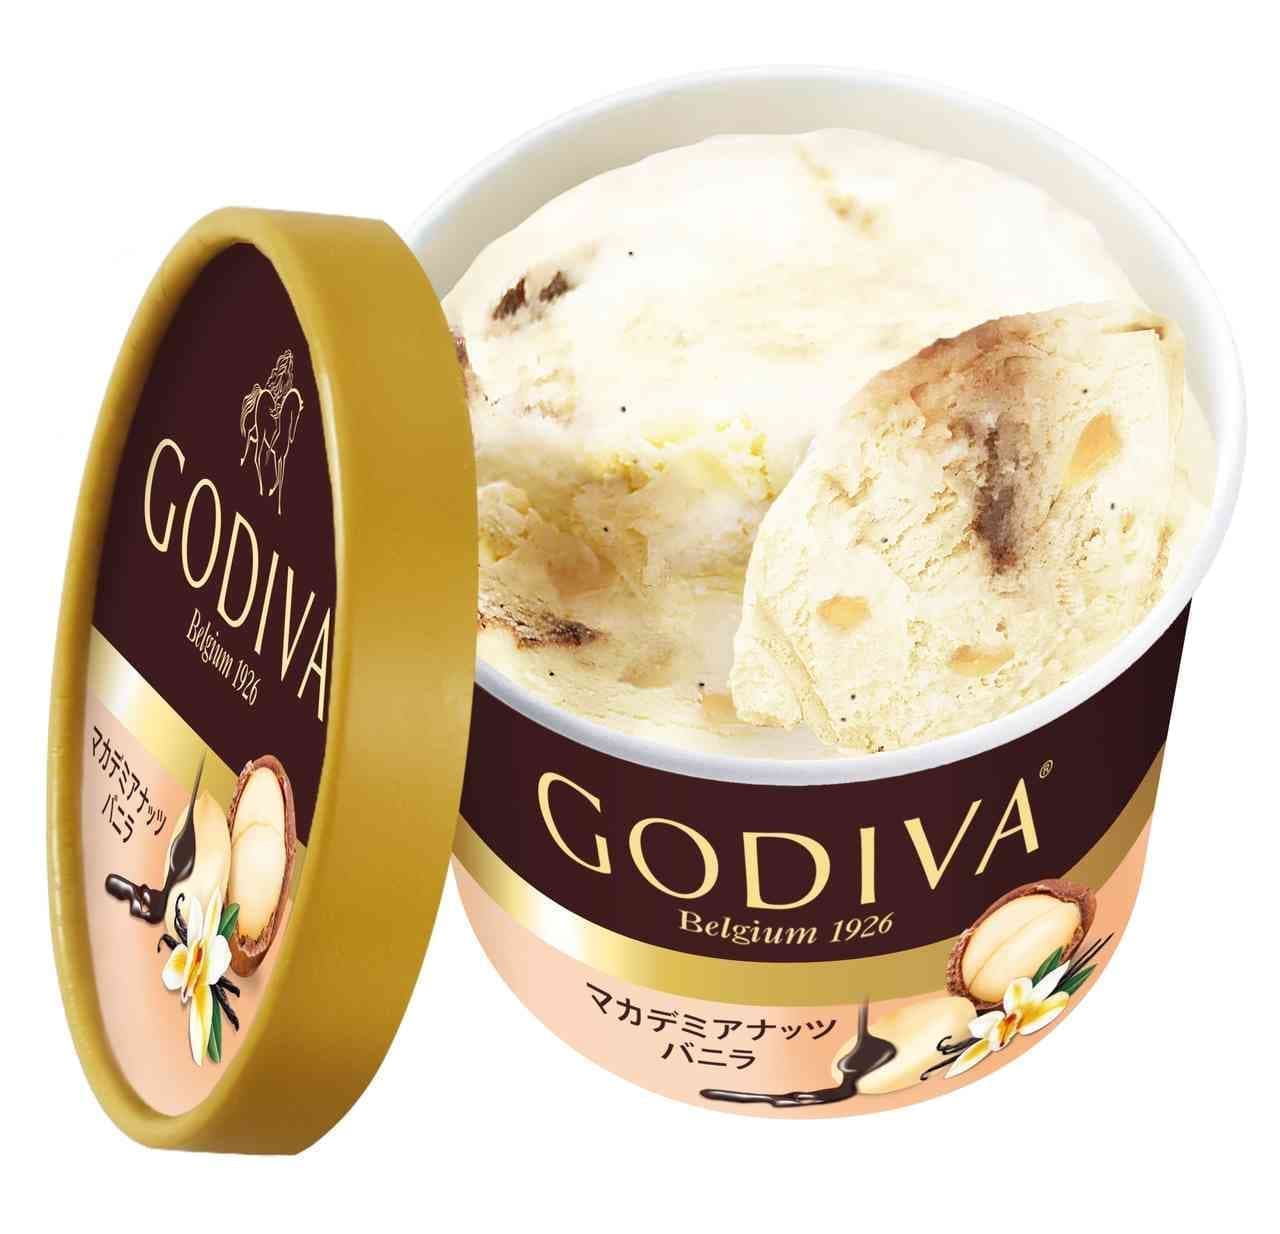 Godiva Cup Ice Cream "Macadamia Nut Vanilla